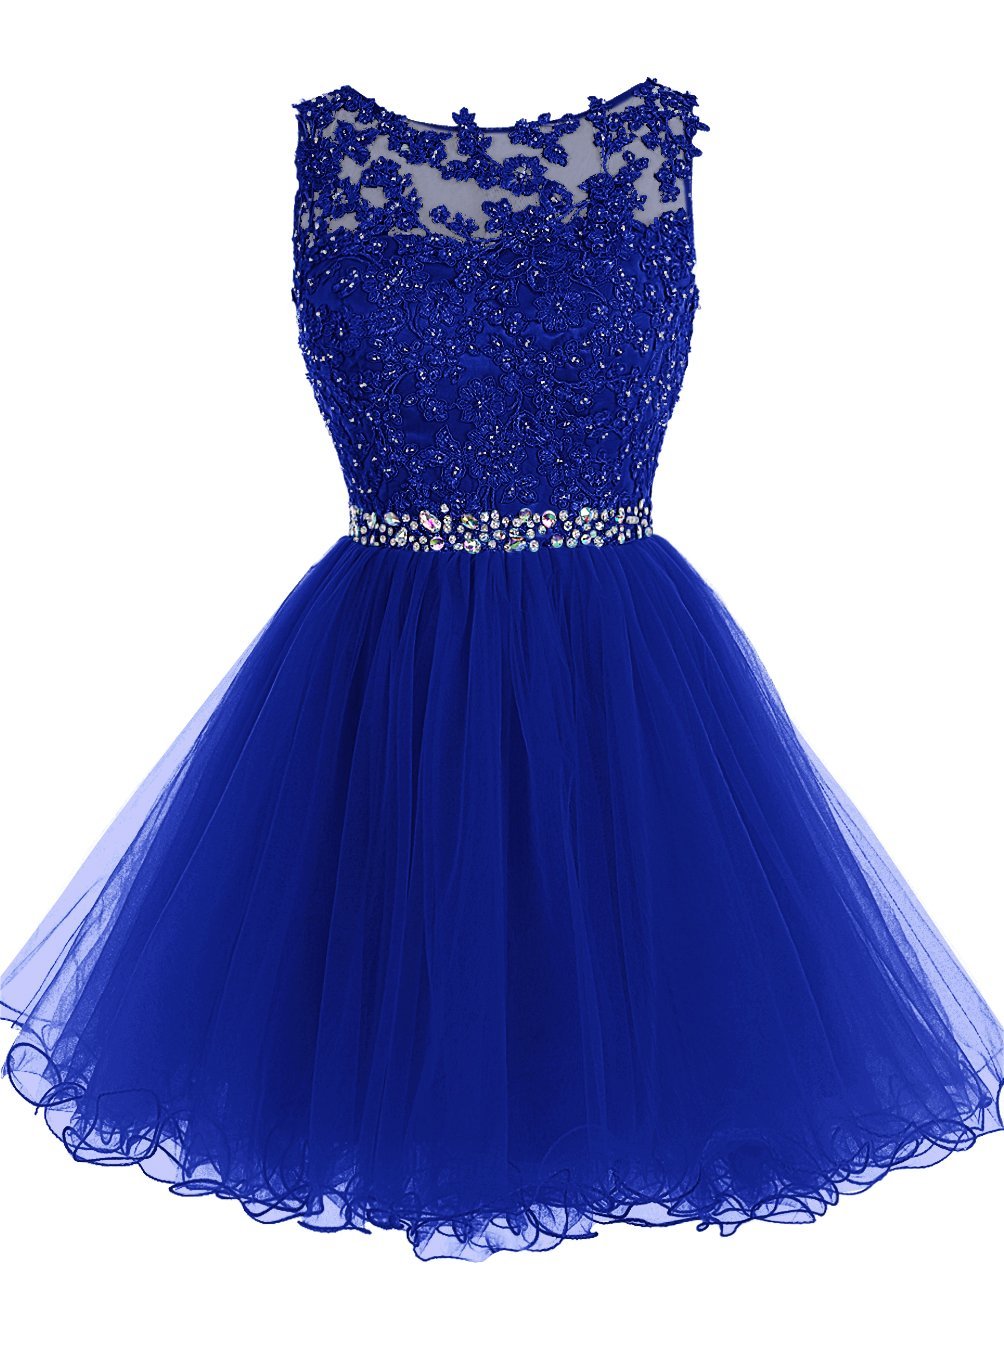 Homecoming Dress, Junior Prom Dress, Party Dress